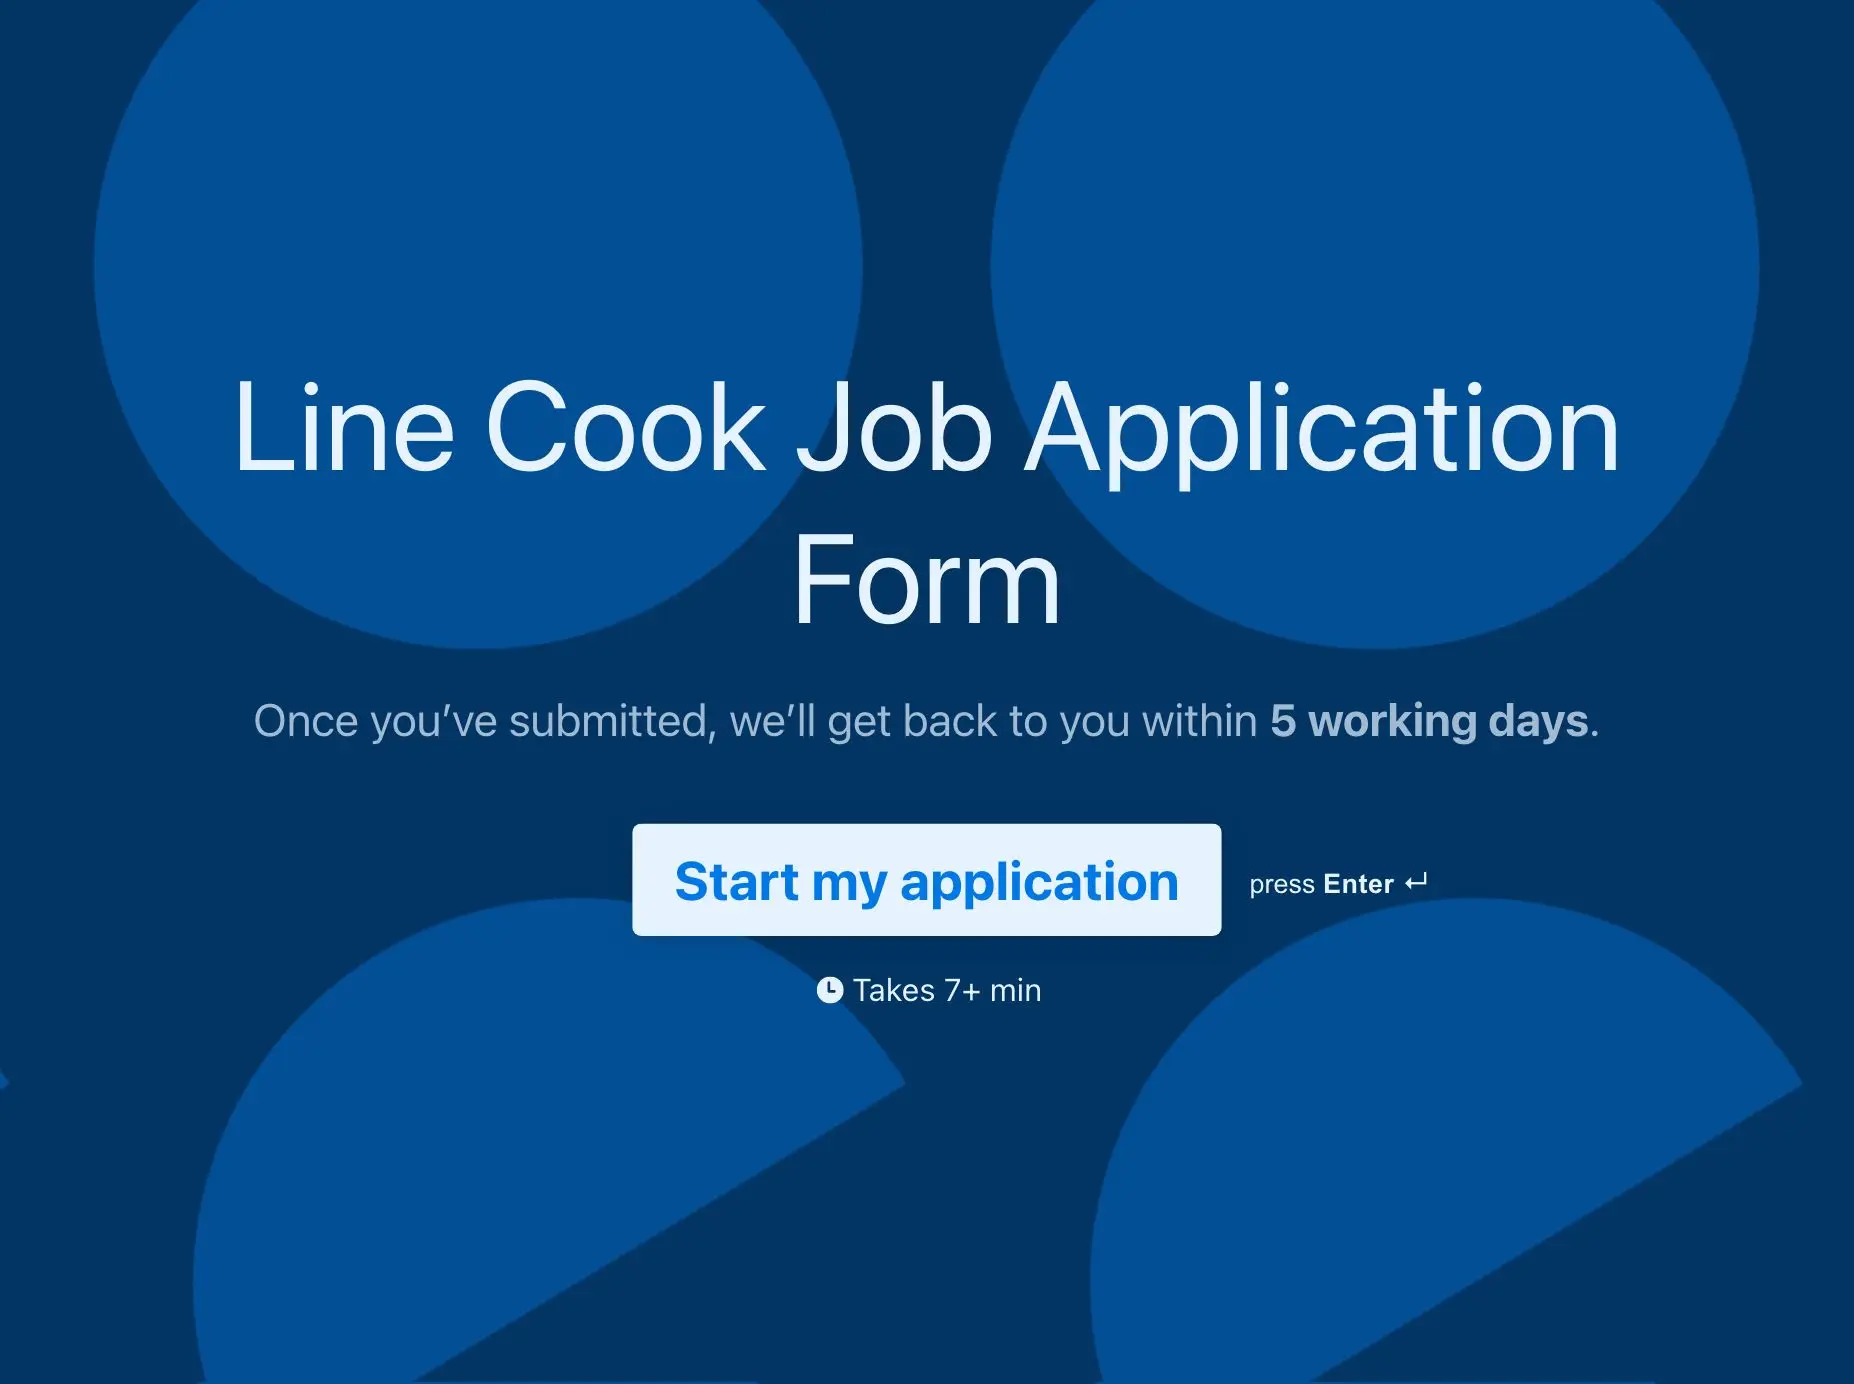 Line Cook Job Application Form Template Hero